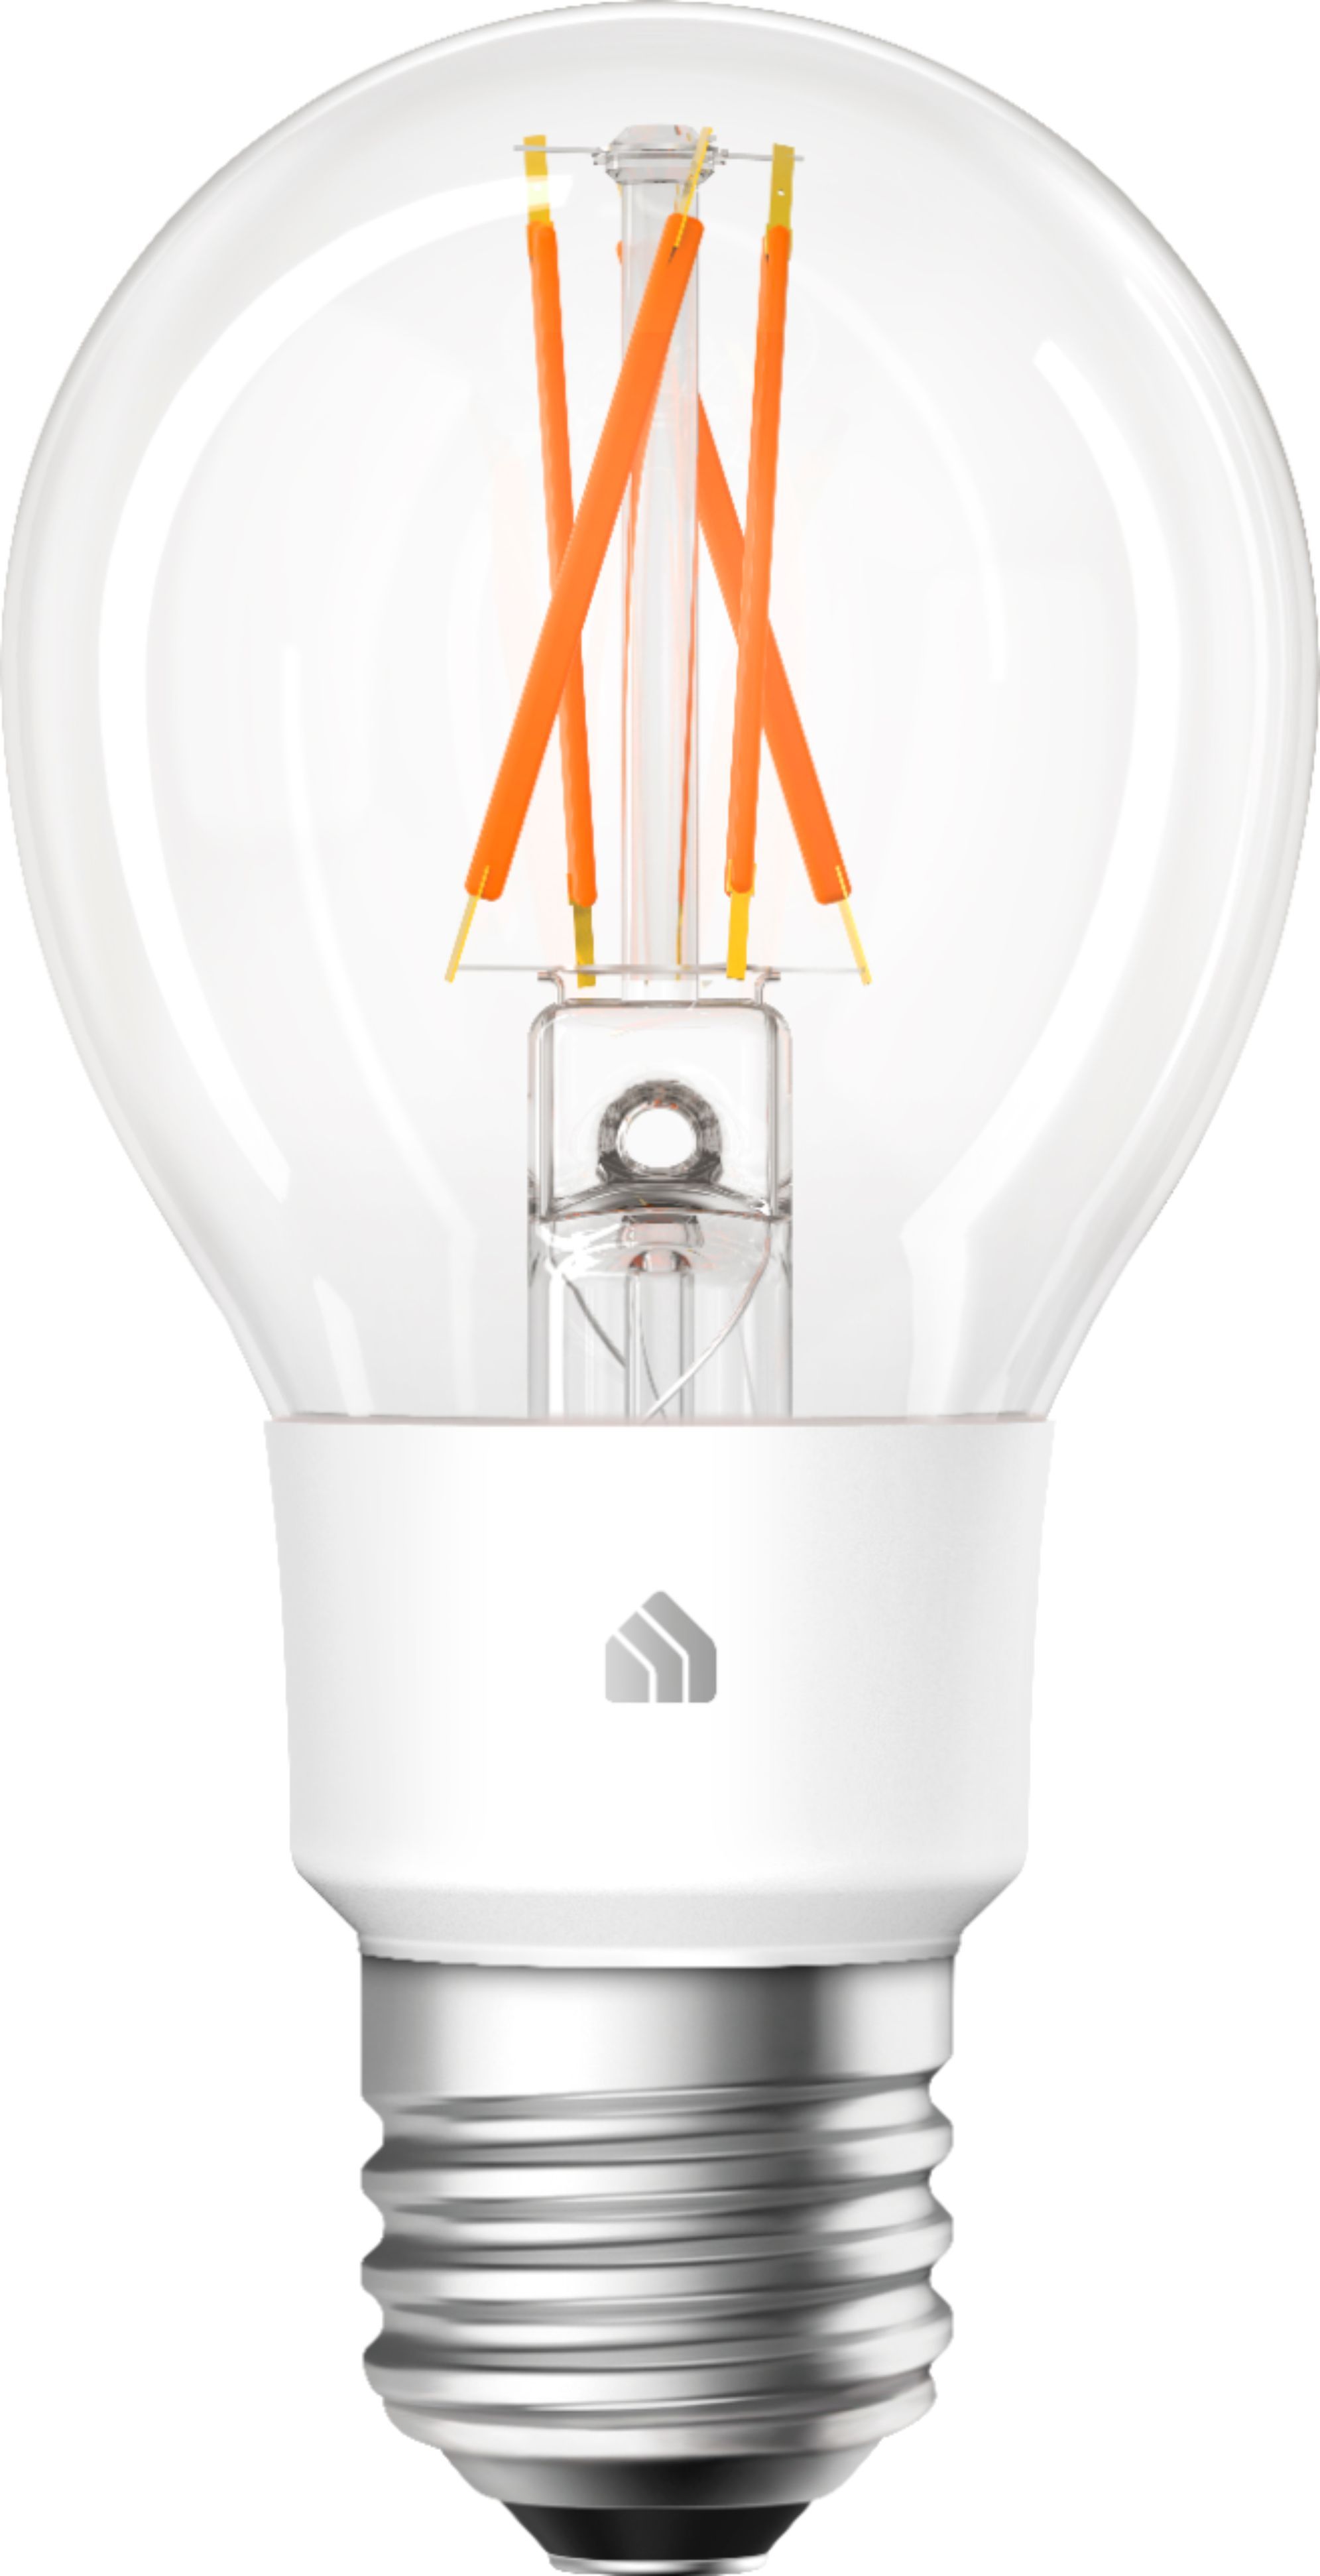 Kasa Smart Wi-Fi LED Bulb 3